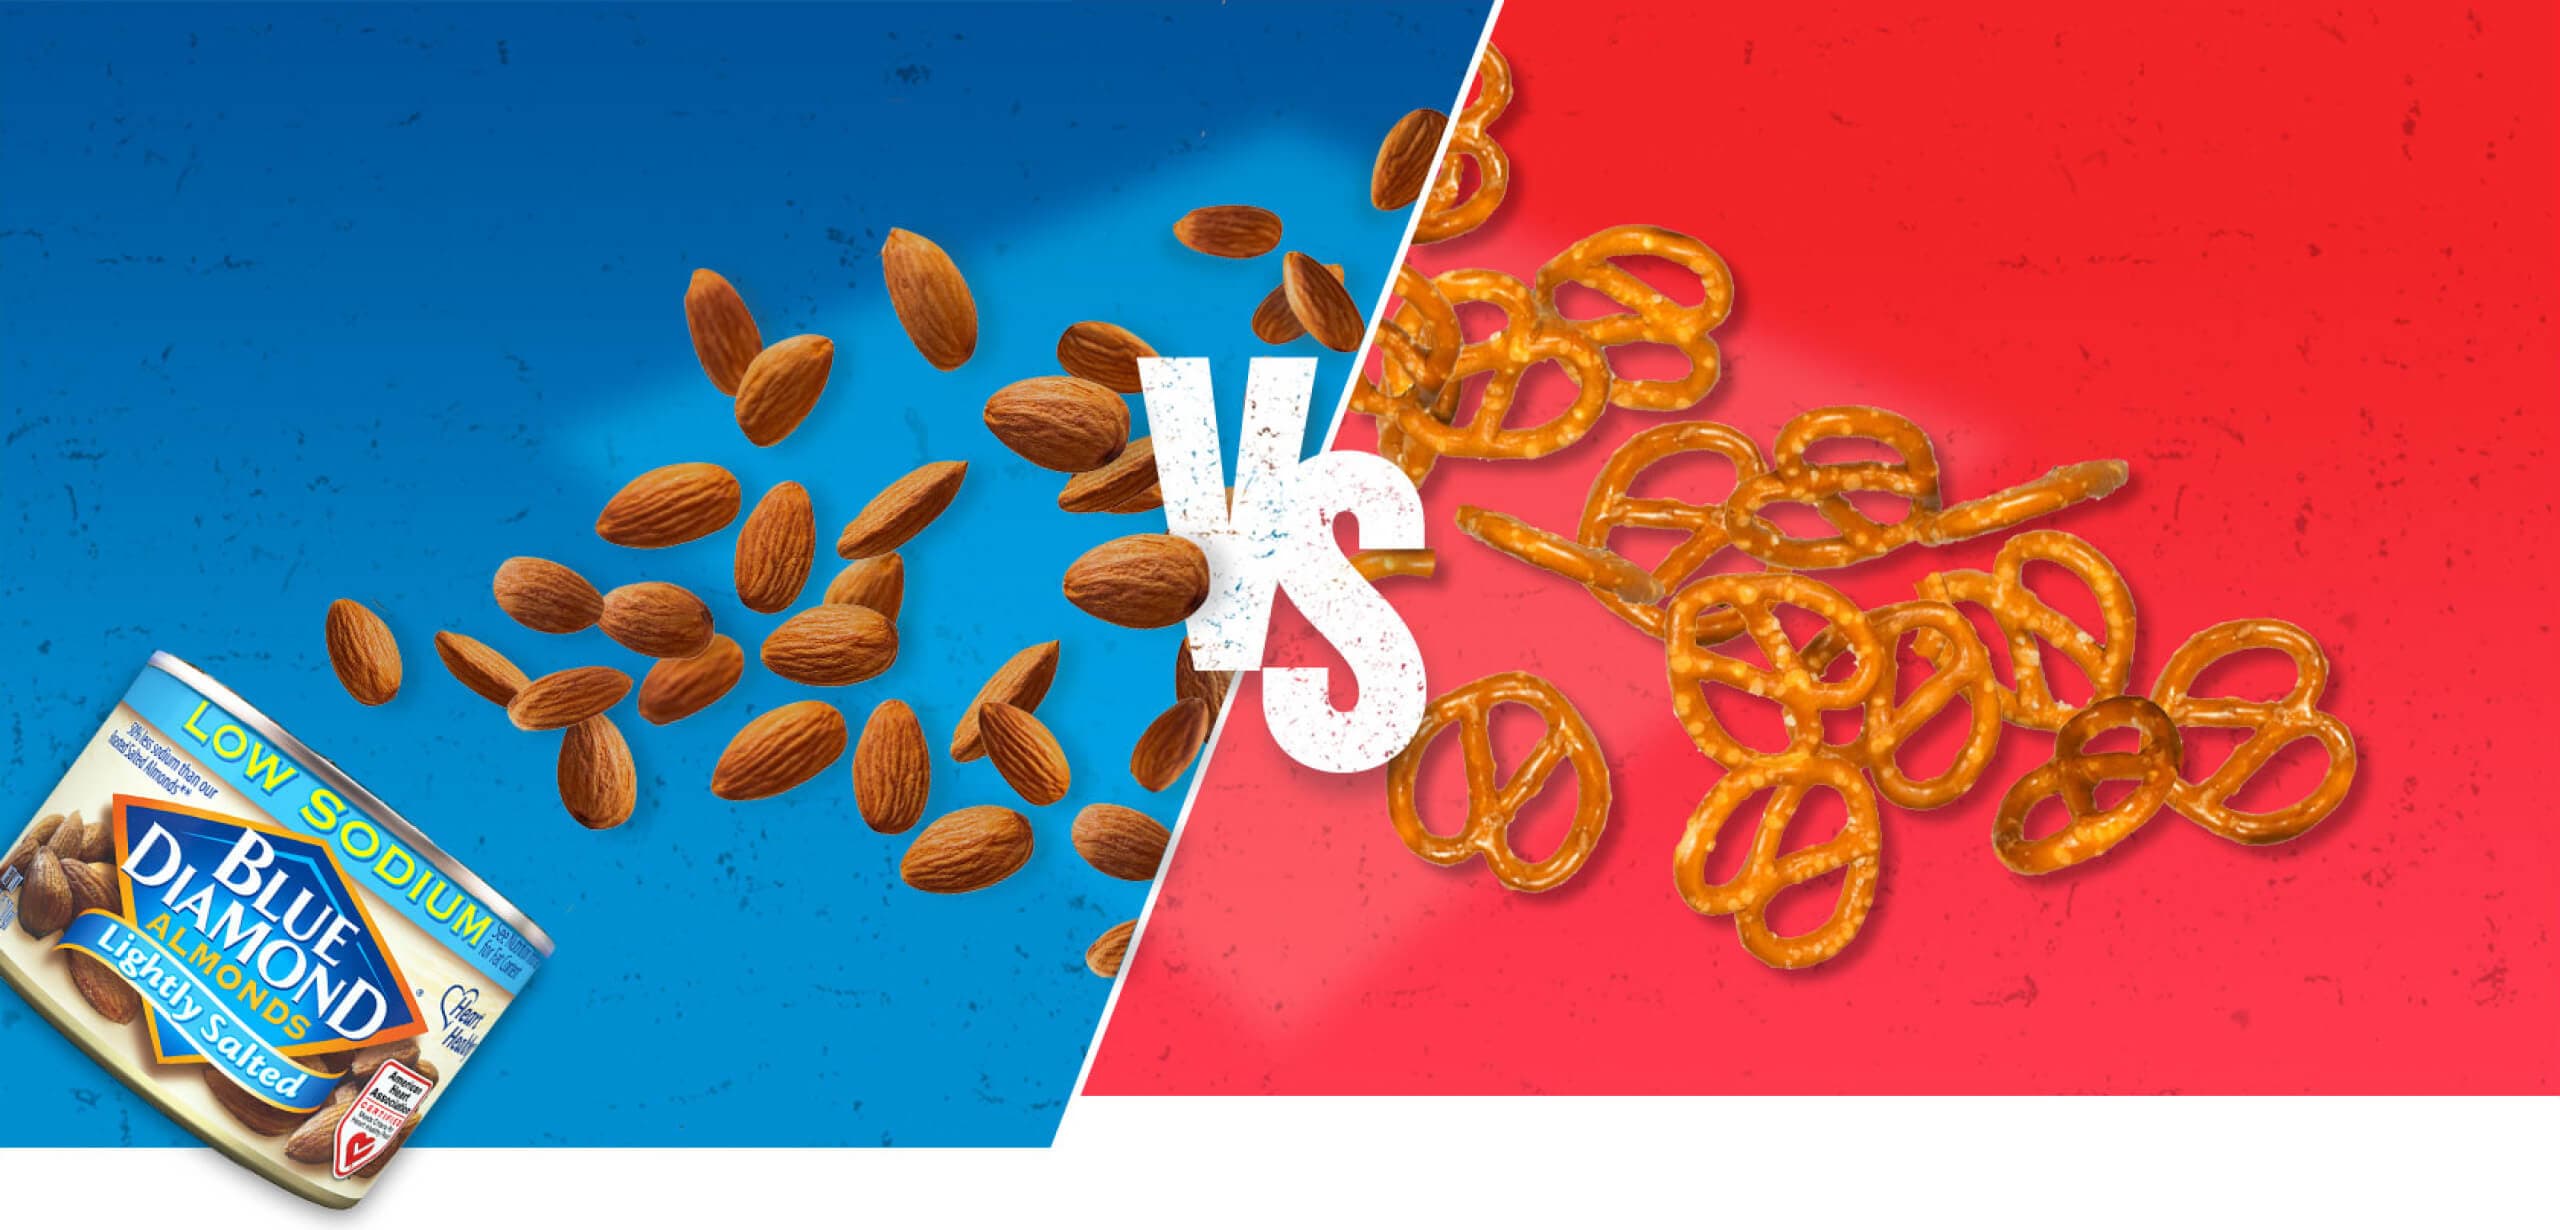 Almonds VS Pretzels